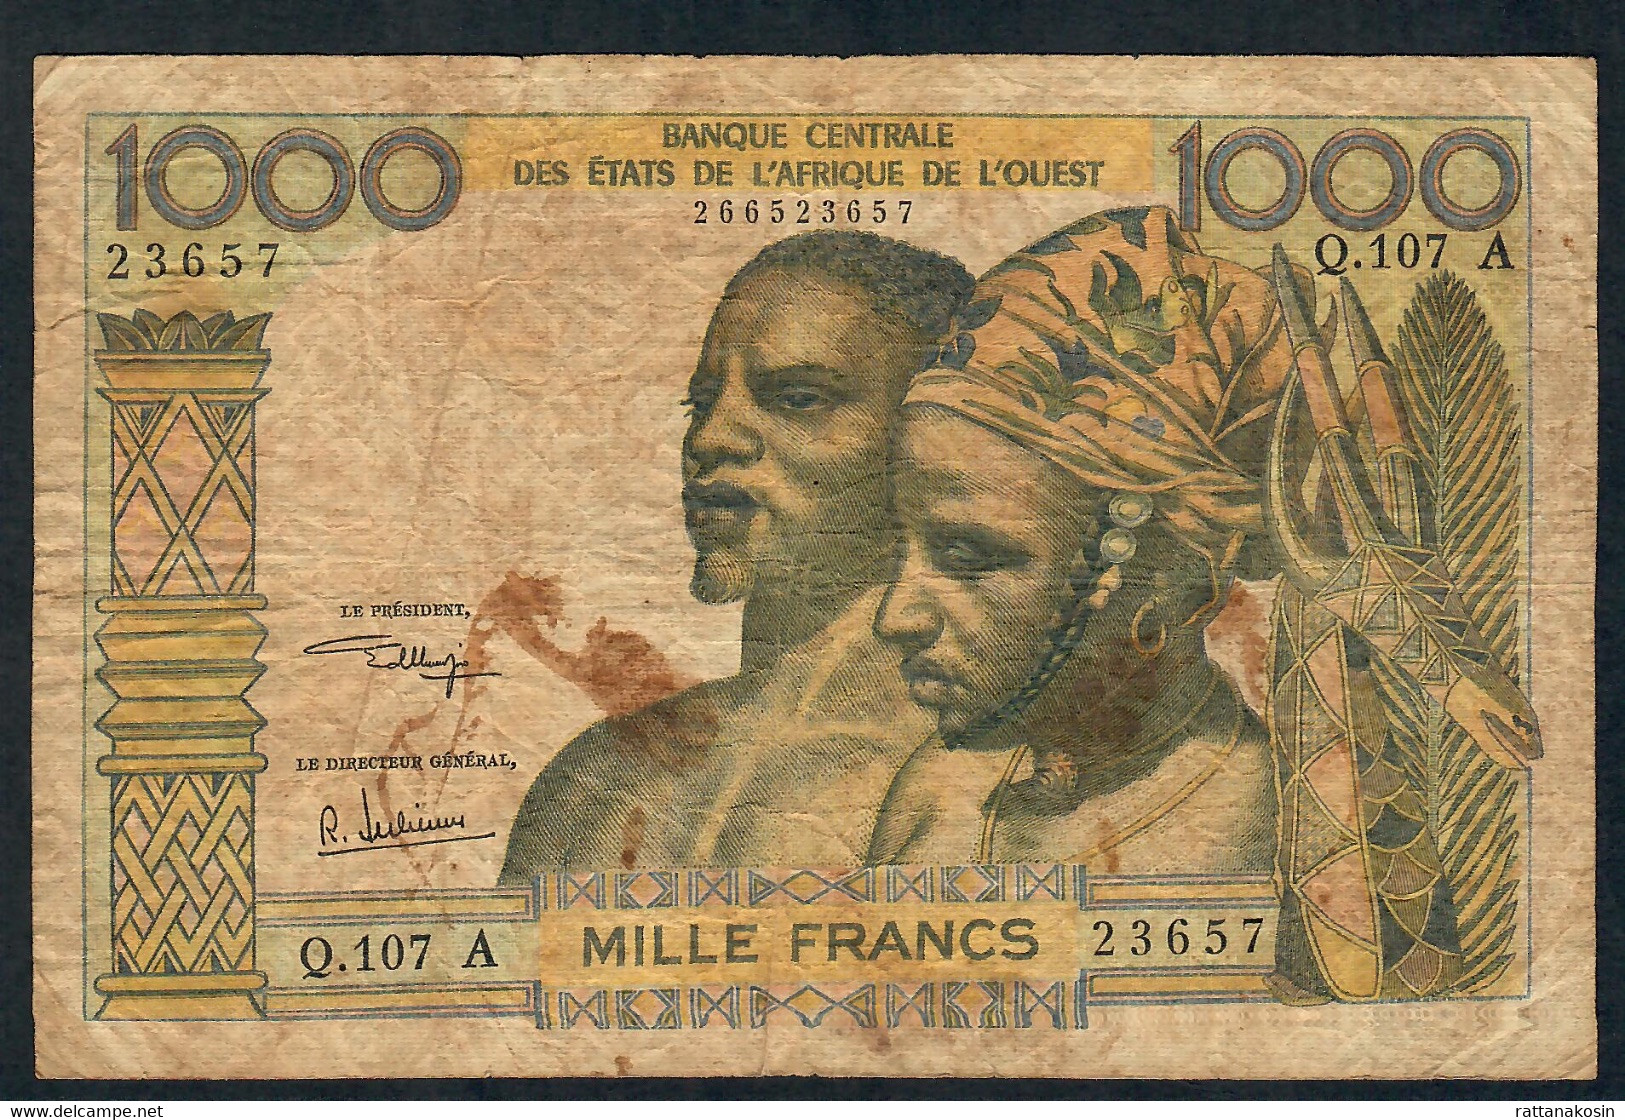 W.A.S. IVORY COAST P103Aj 1000 FRANCS TYPE 1959 Issued 1975 SIGNATURE 9 FINE - Westafrikanischer Staaten